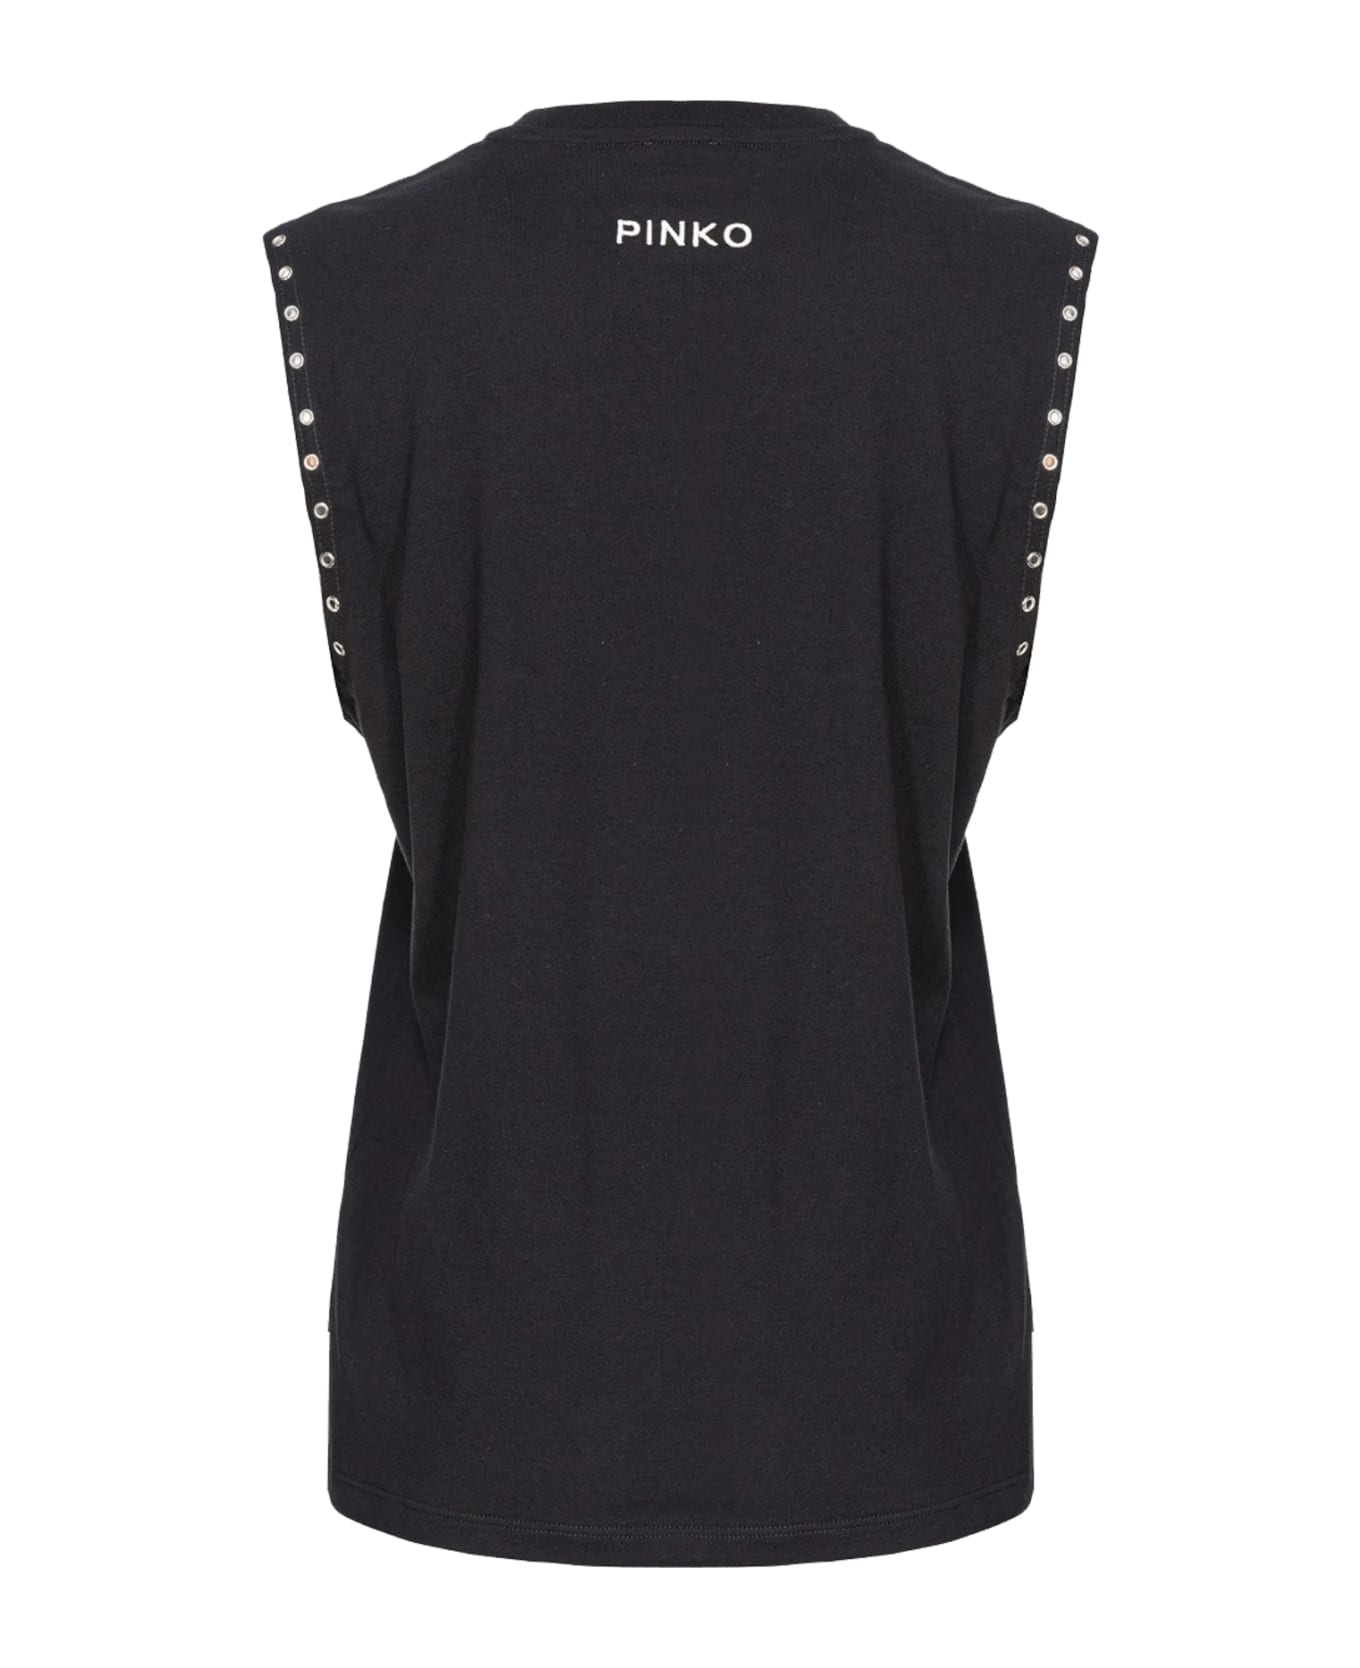 Pinko Bow Printed Sleeveless Top - Black